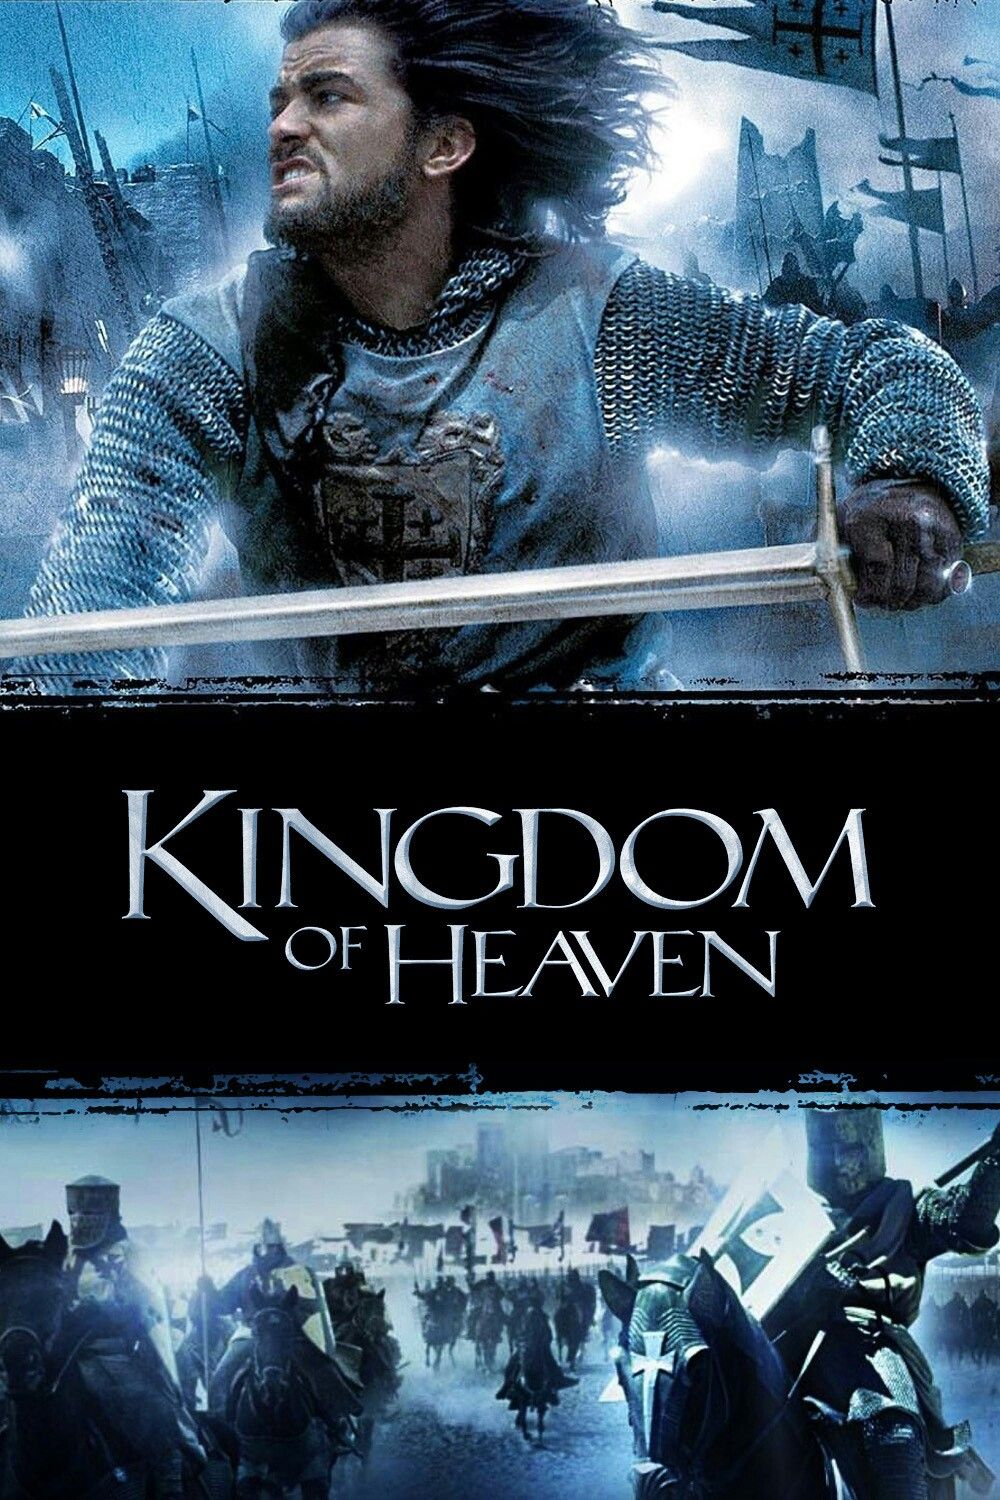 Kingdom Of Heaven Full Movie Online